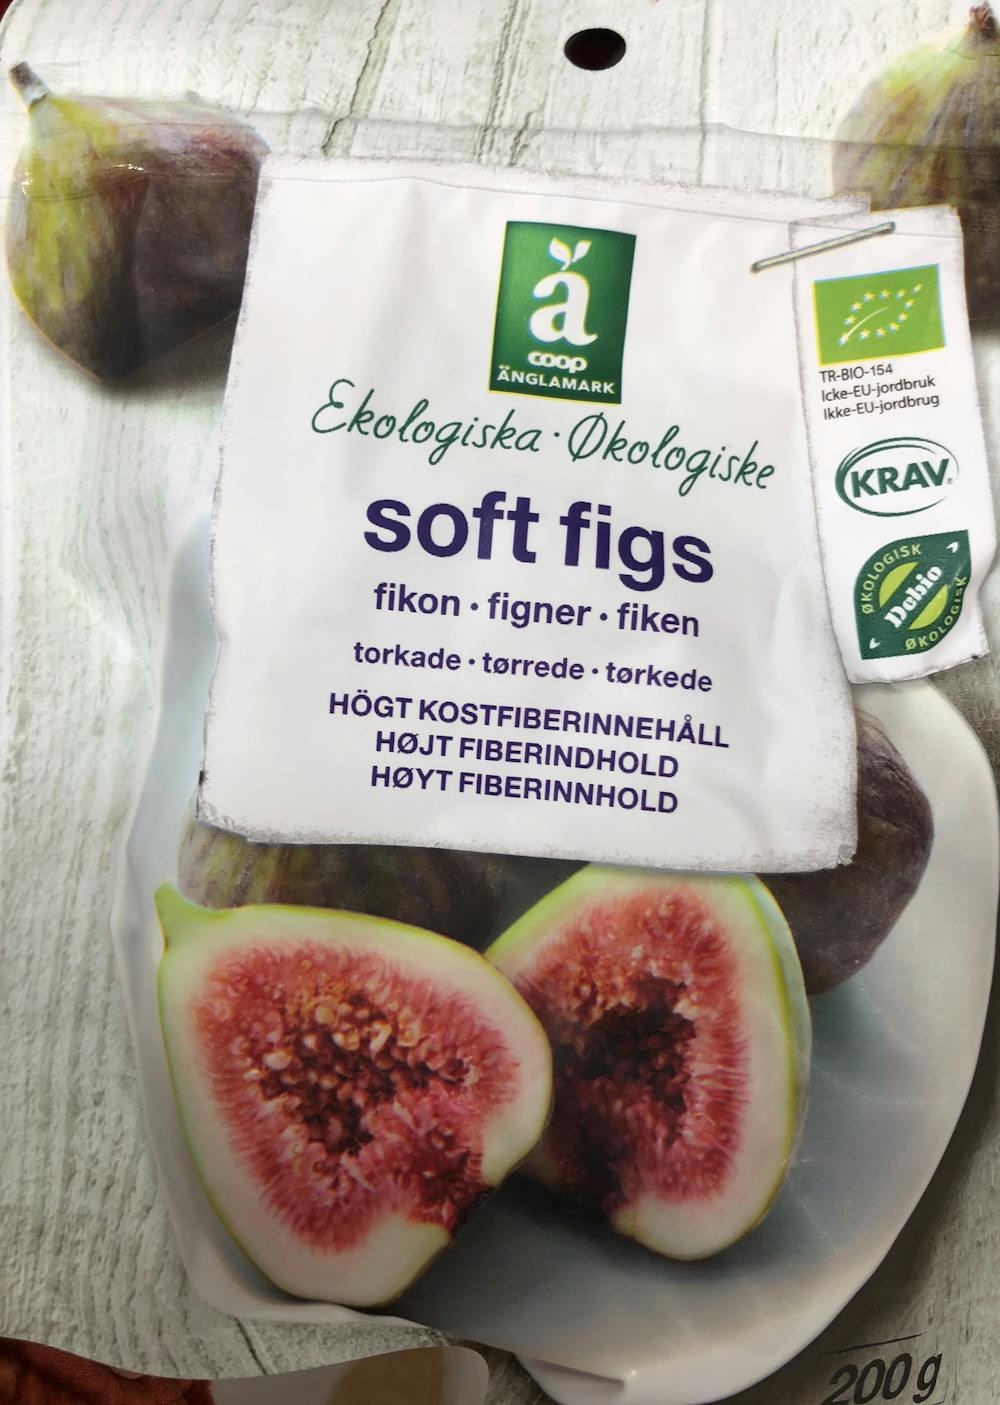 Soft figs, Ânglamark